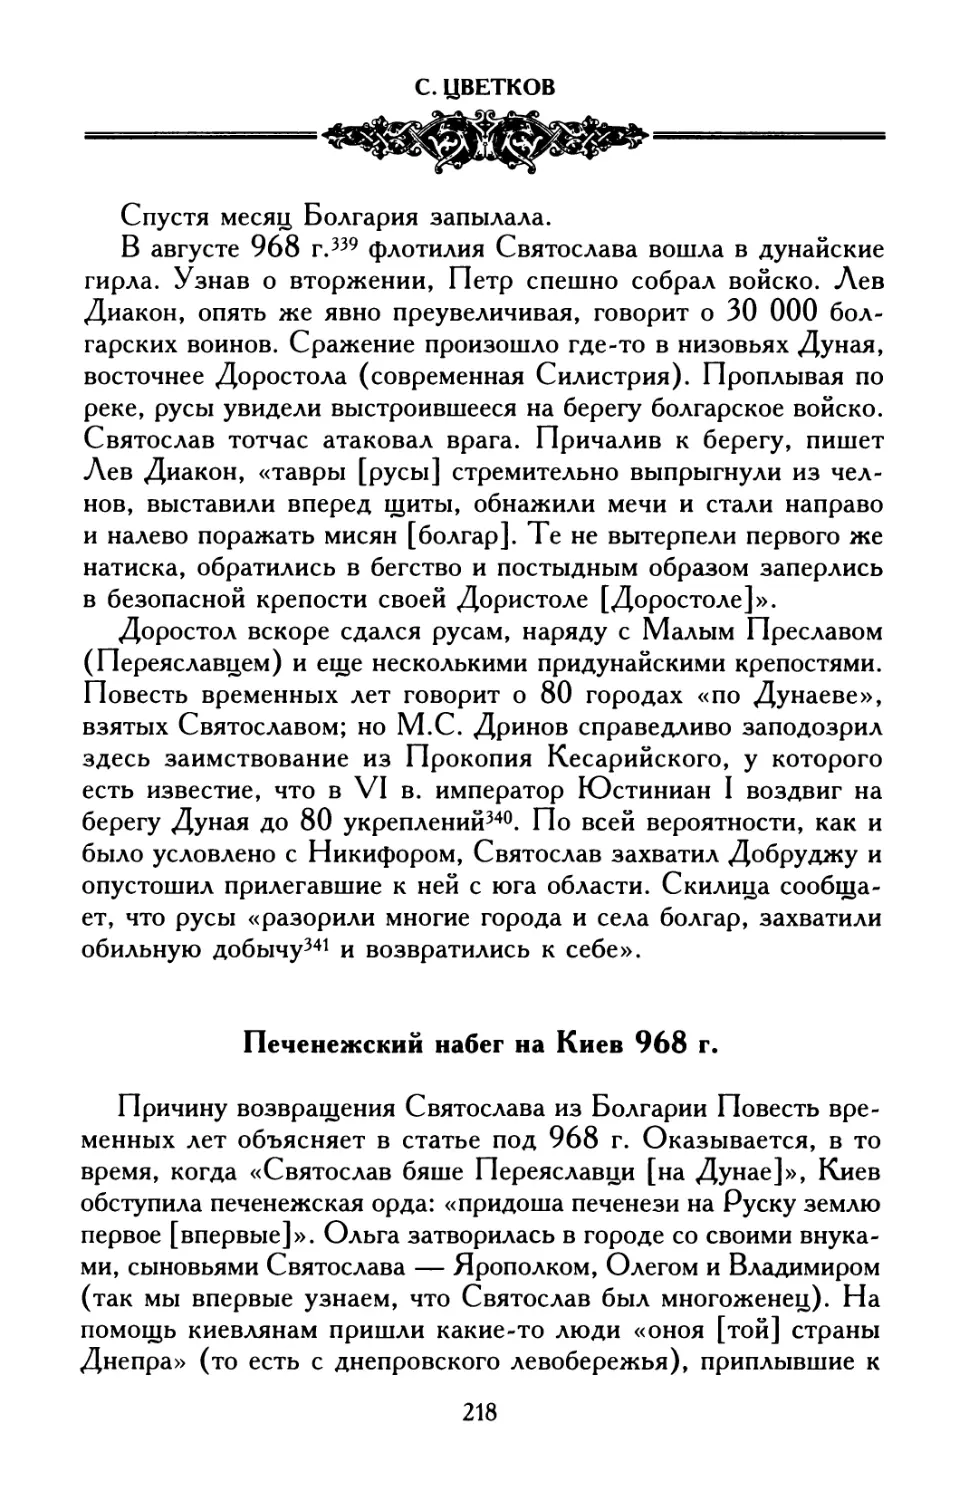 Печенежский набег на Киев 968 г.